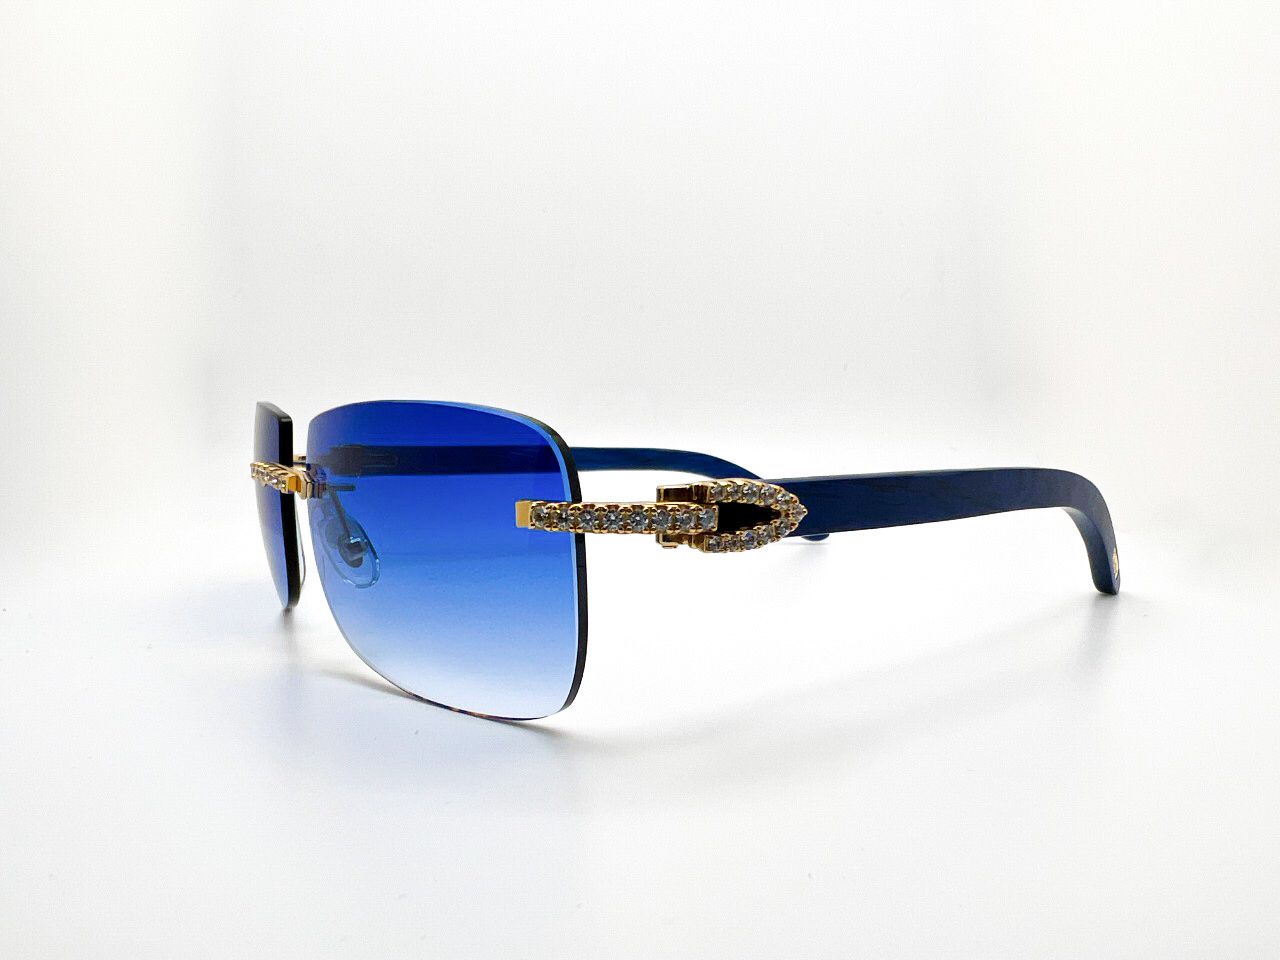 Decor C Coblat Blue Woods 5pc .5 pointers Sunglasses